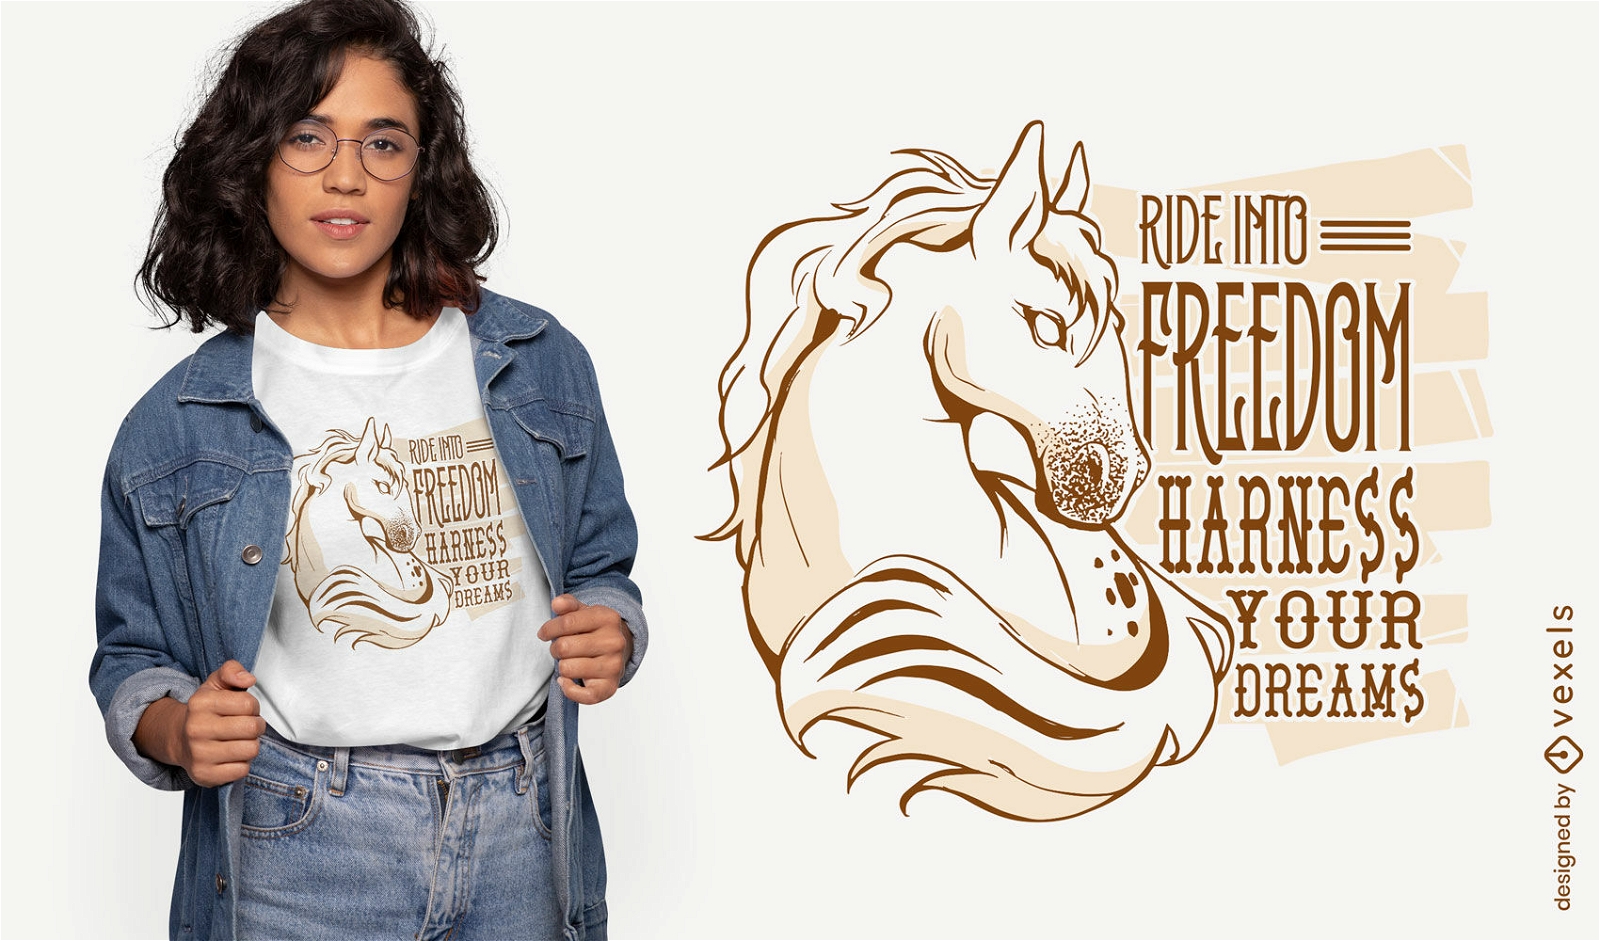 Ride into freedom t-shirt design